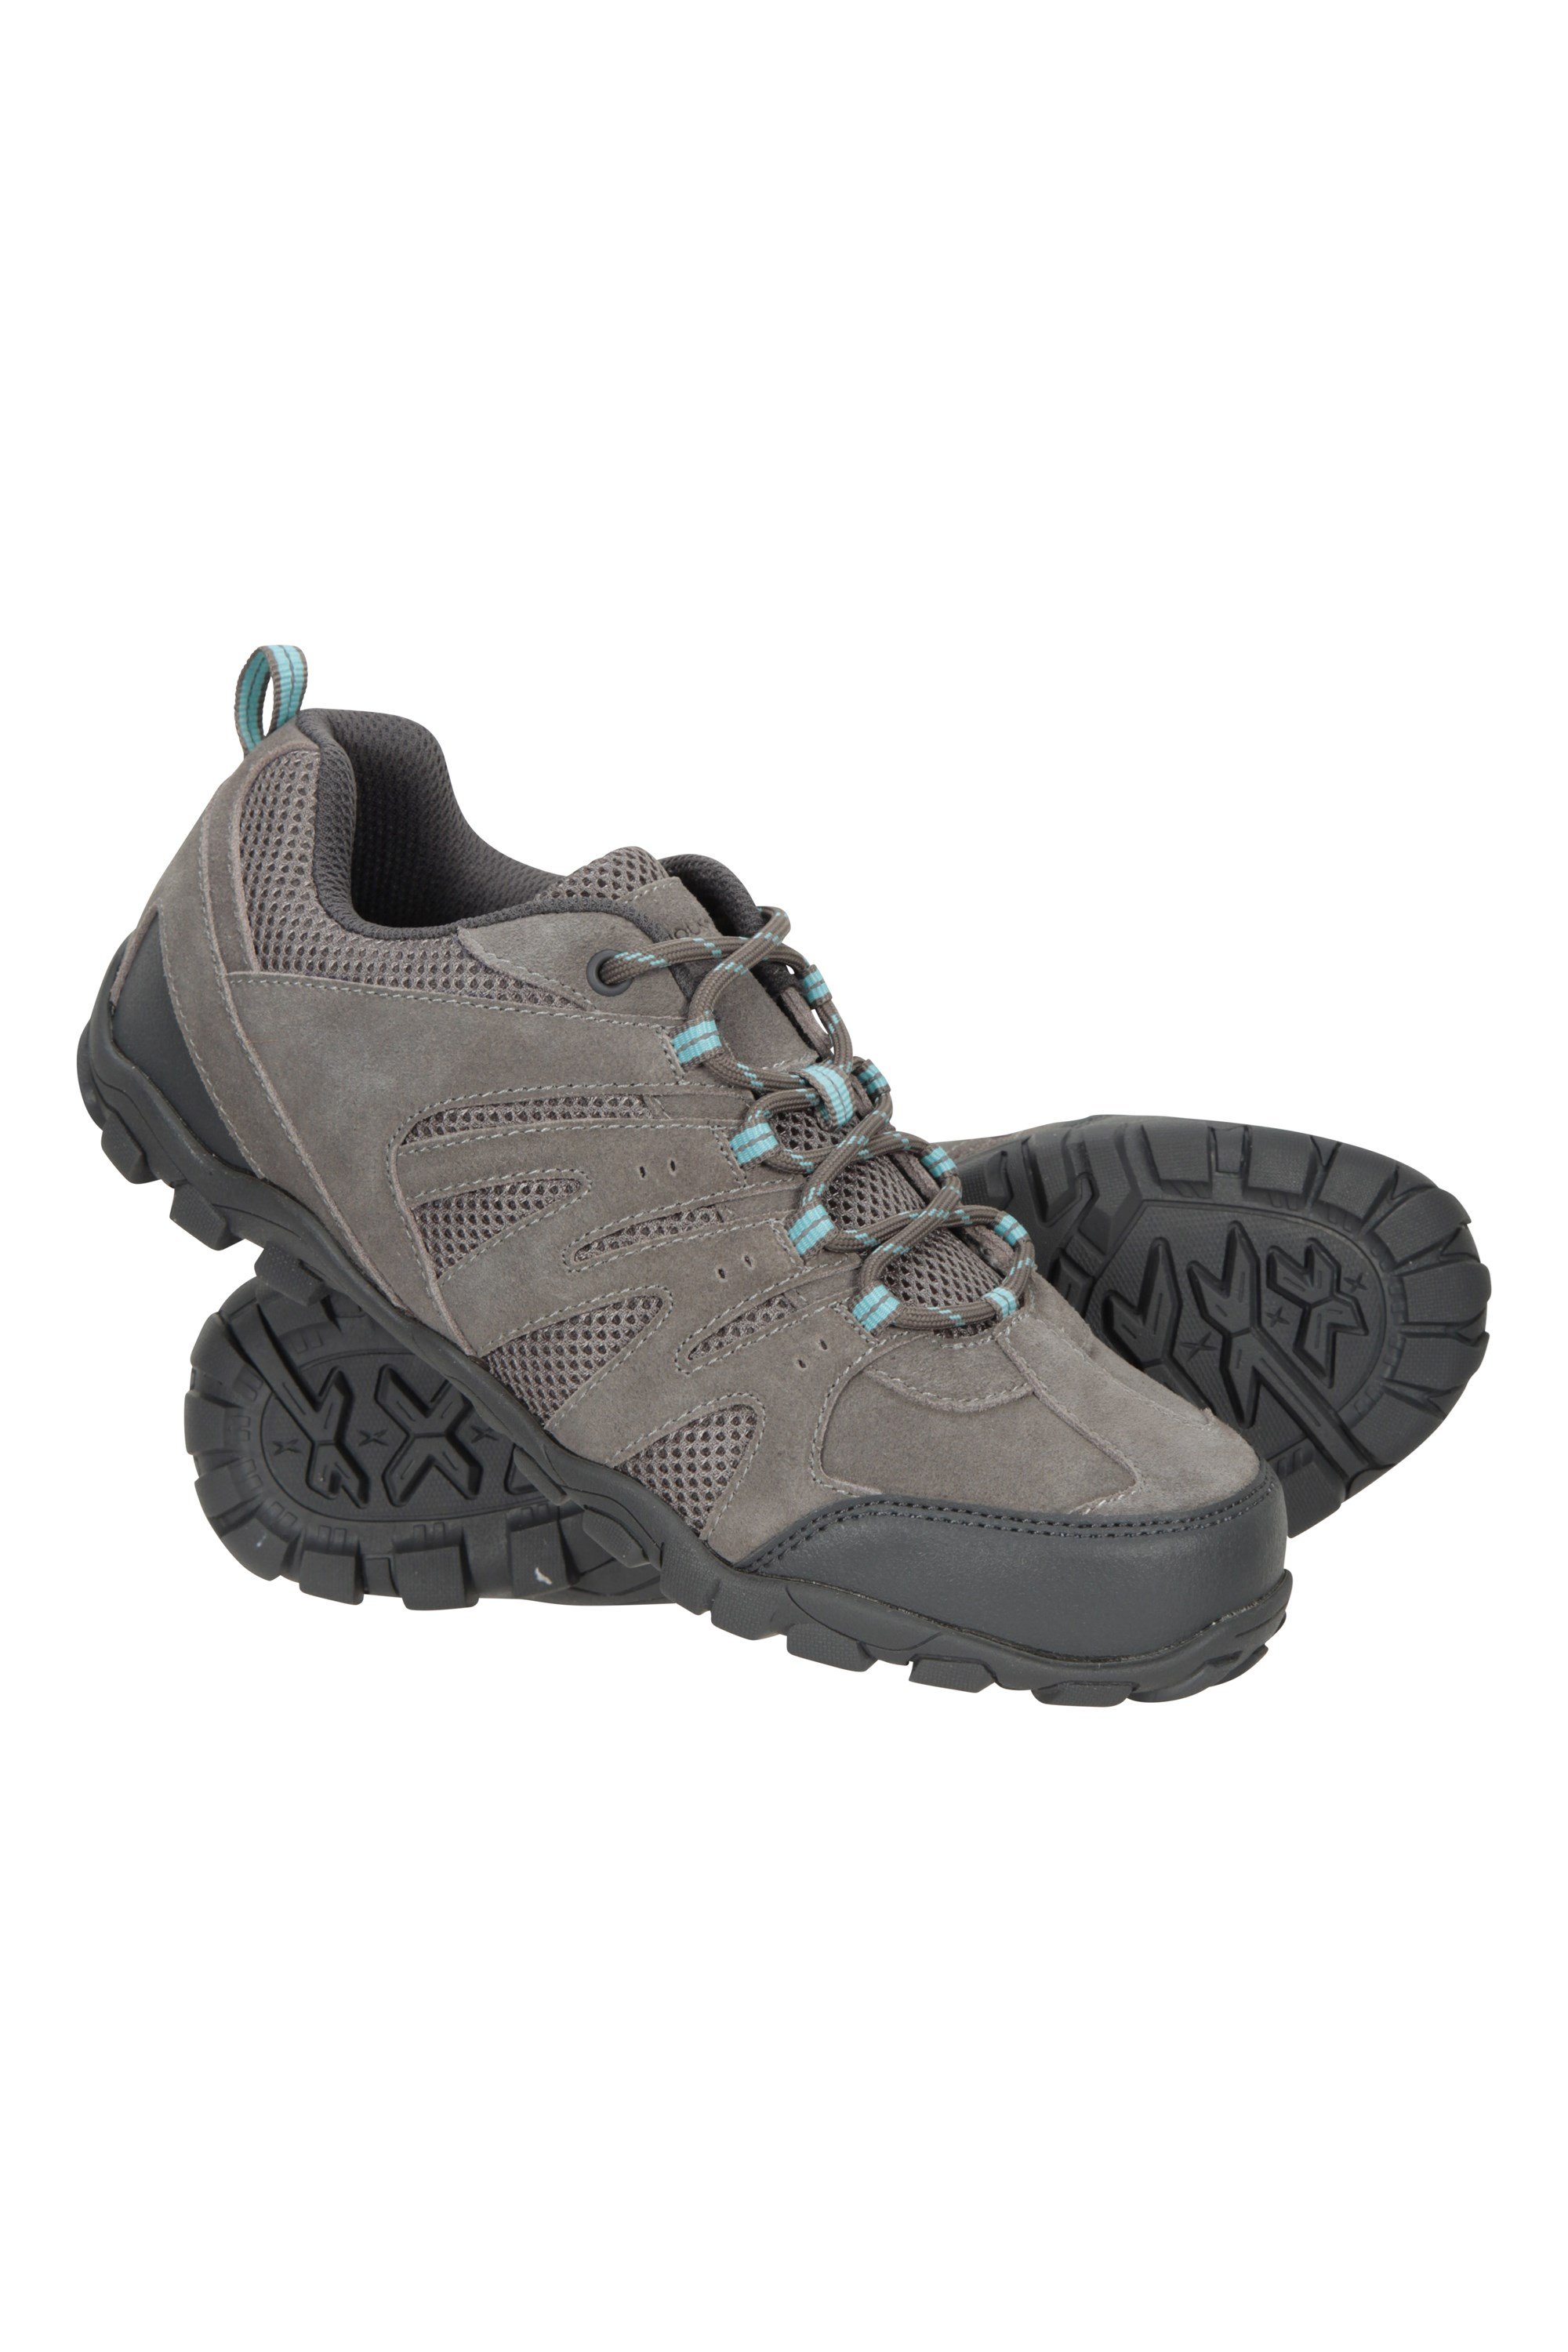 Mountain Warehouse Mens Lightweight Outdoor Walking Shoes w/ Mesh & Suede Upper 